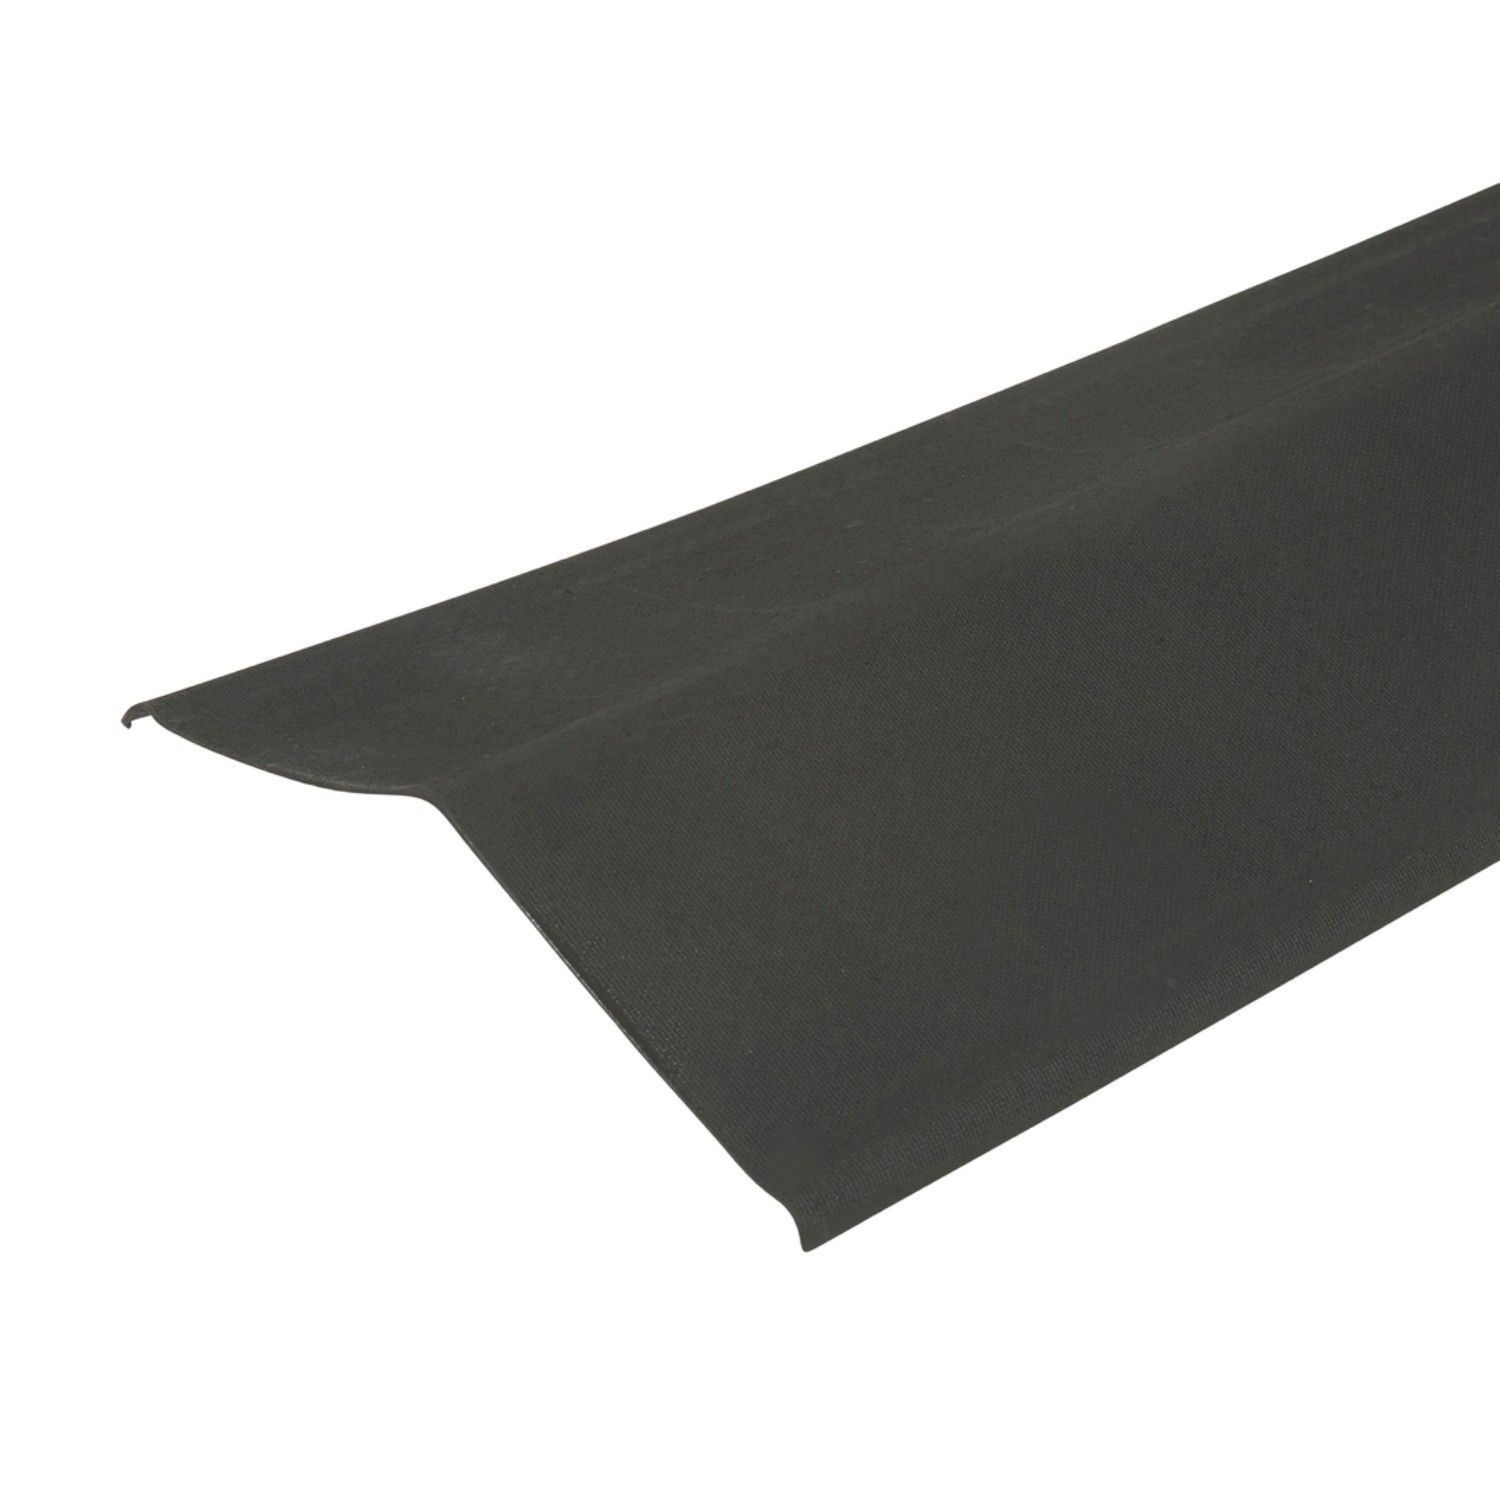 Onduline Verge 1000mm Long Bitumen Roof Sheets Various Colours